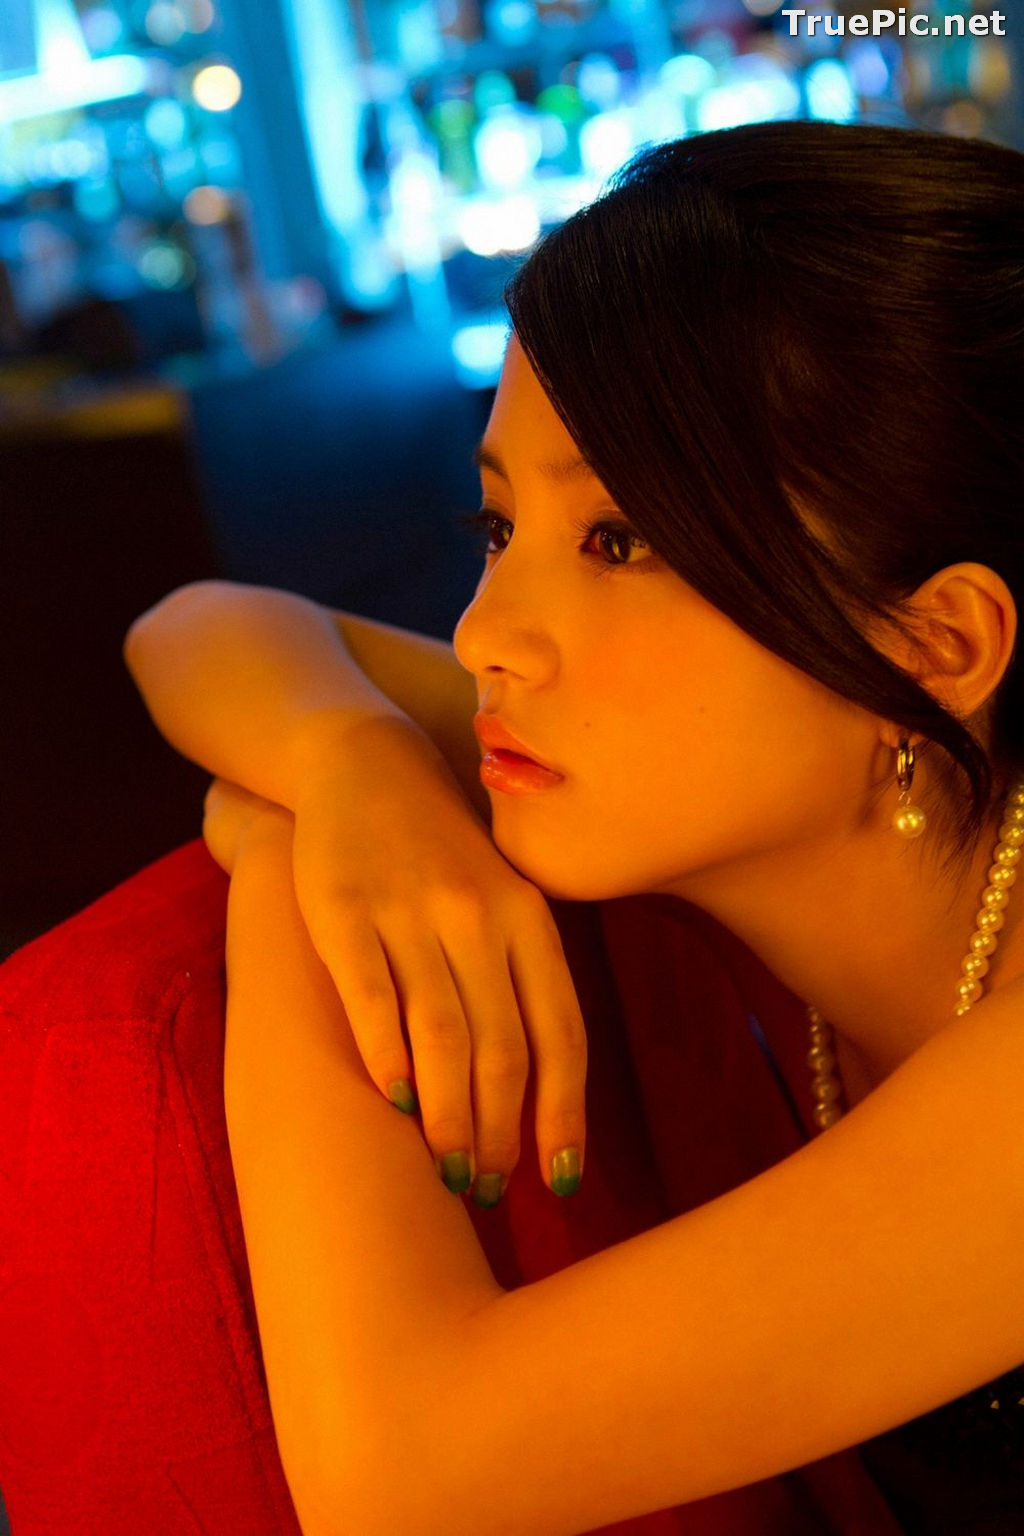 Image [YS Web] Vol.506 - Japanese Actress and Singer - Umika Kawashima - TruePic.net - Picture-15